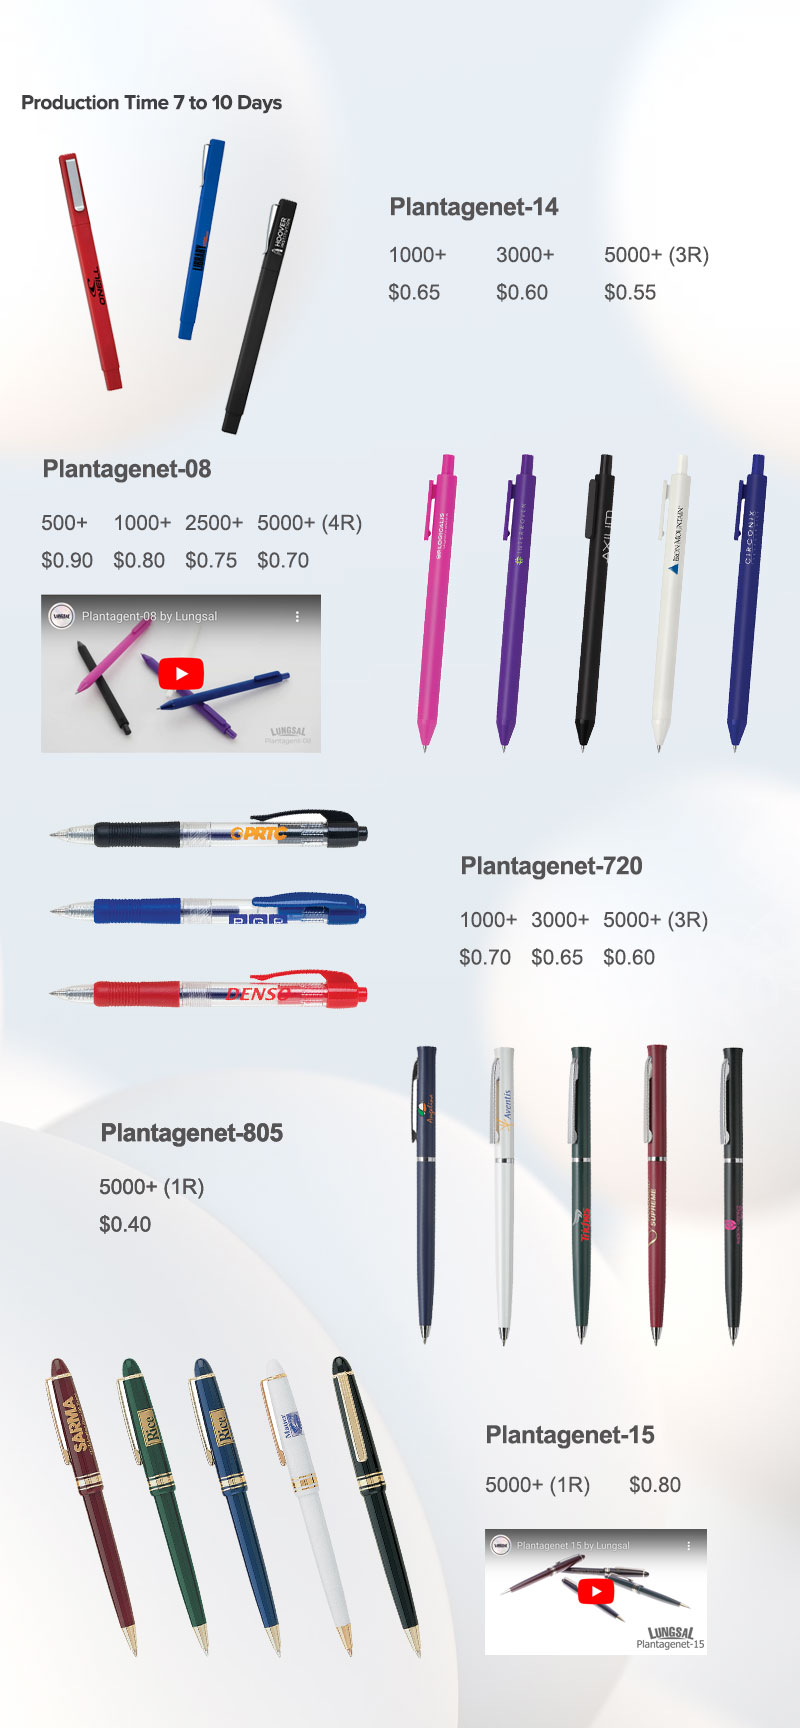 Lungsal's Iconic Plastic Pens